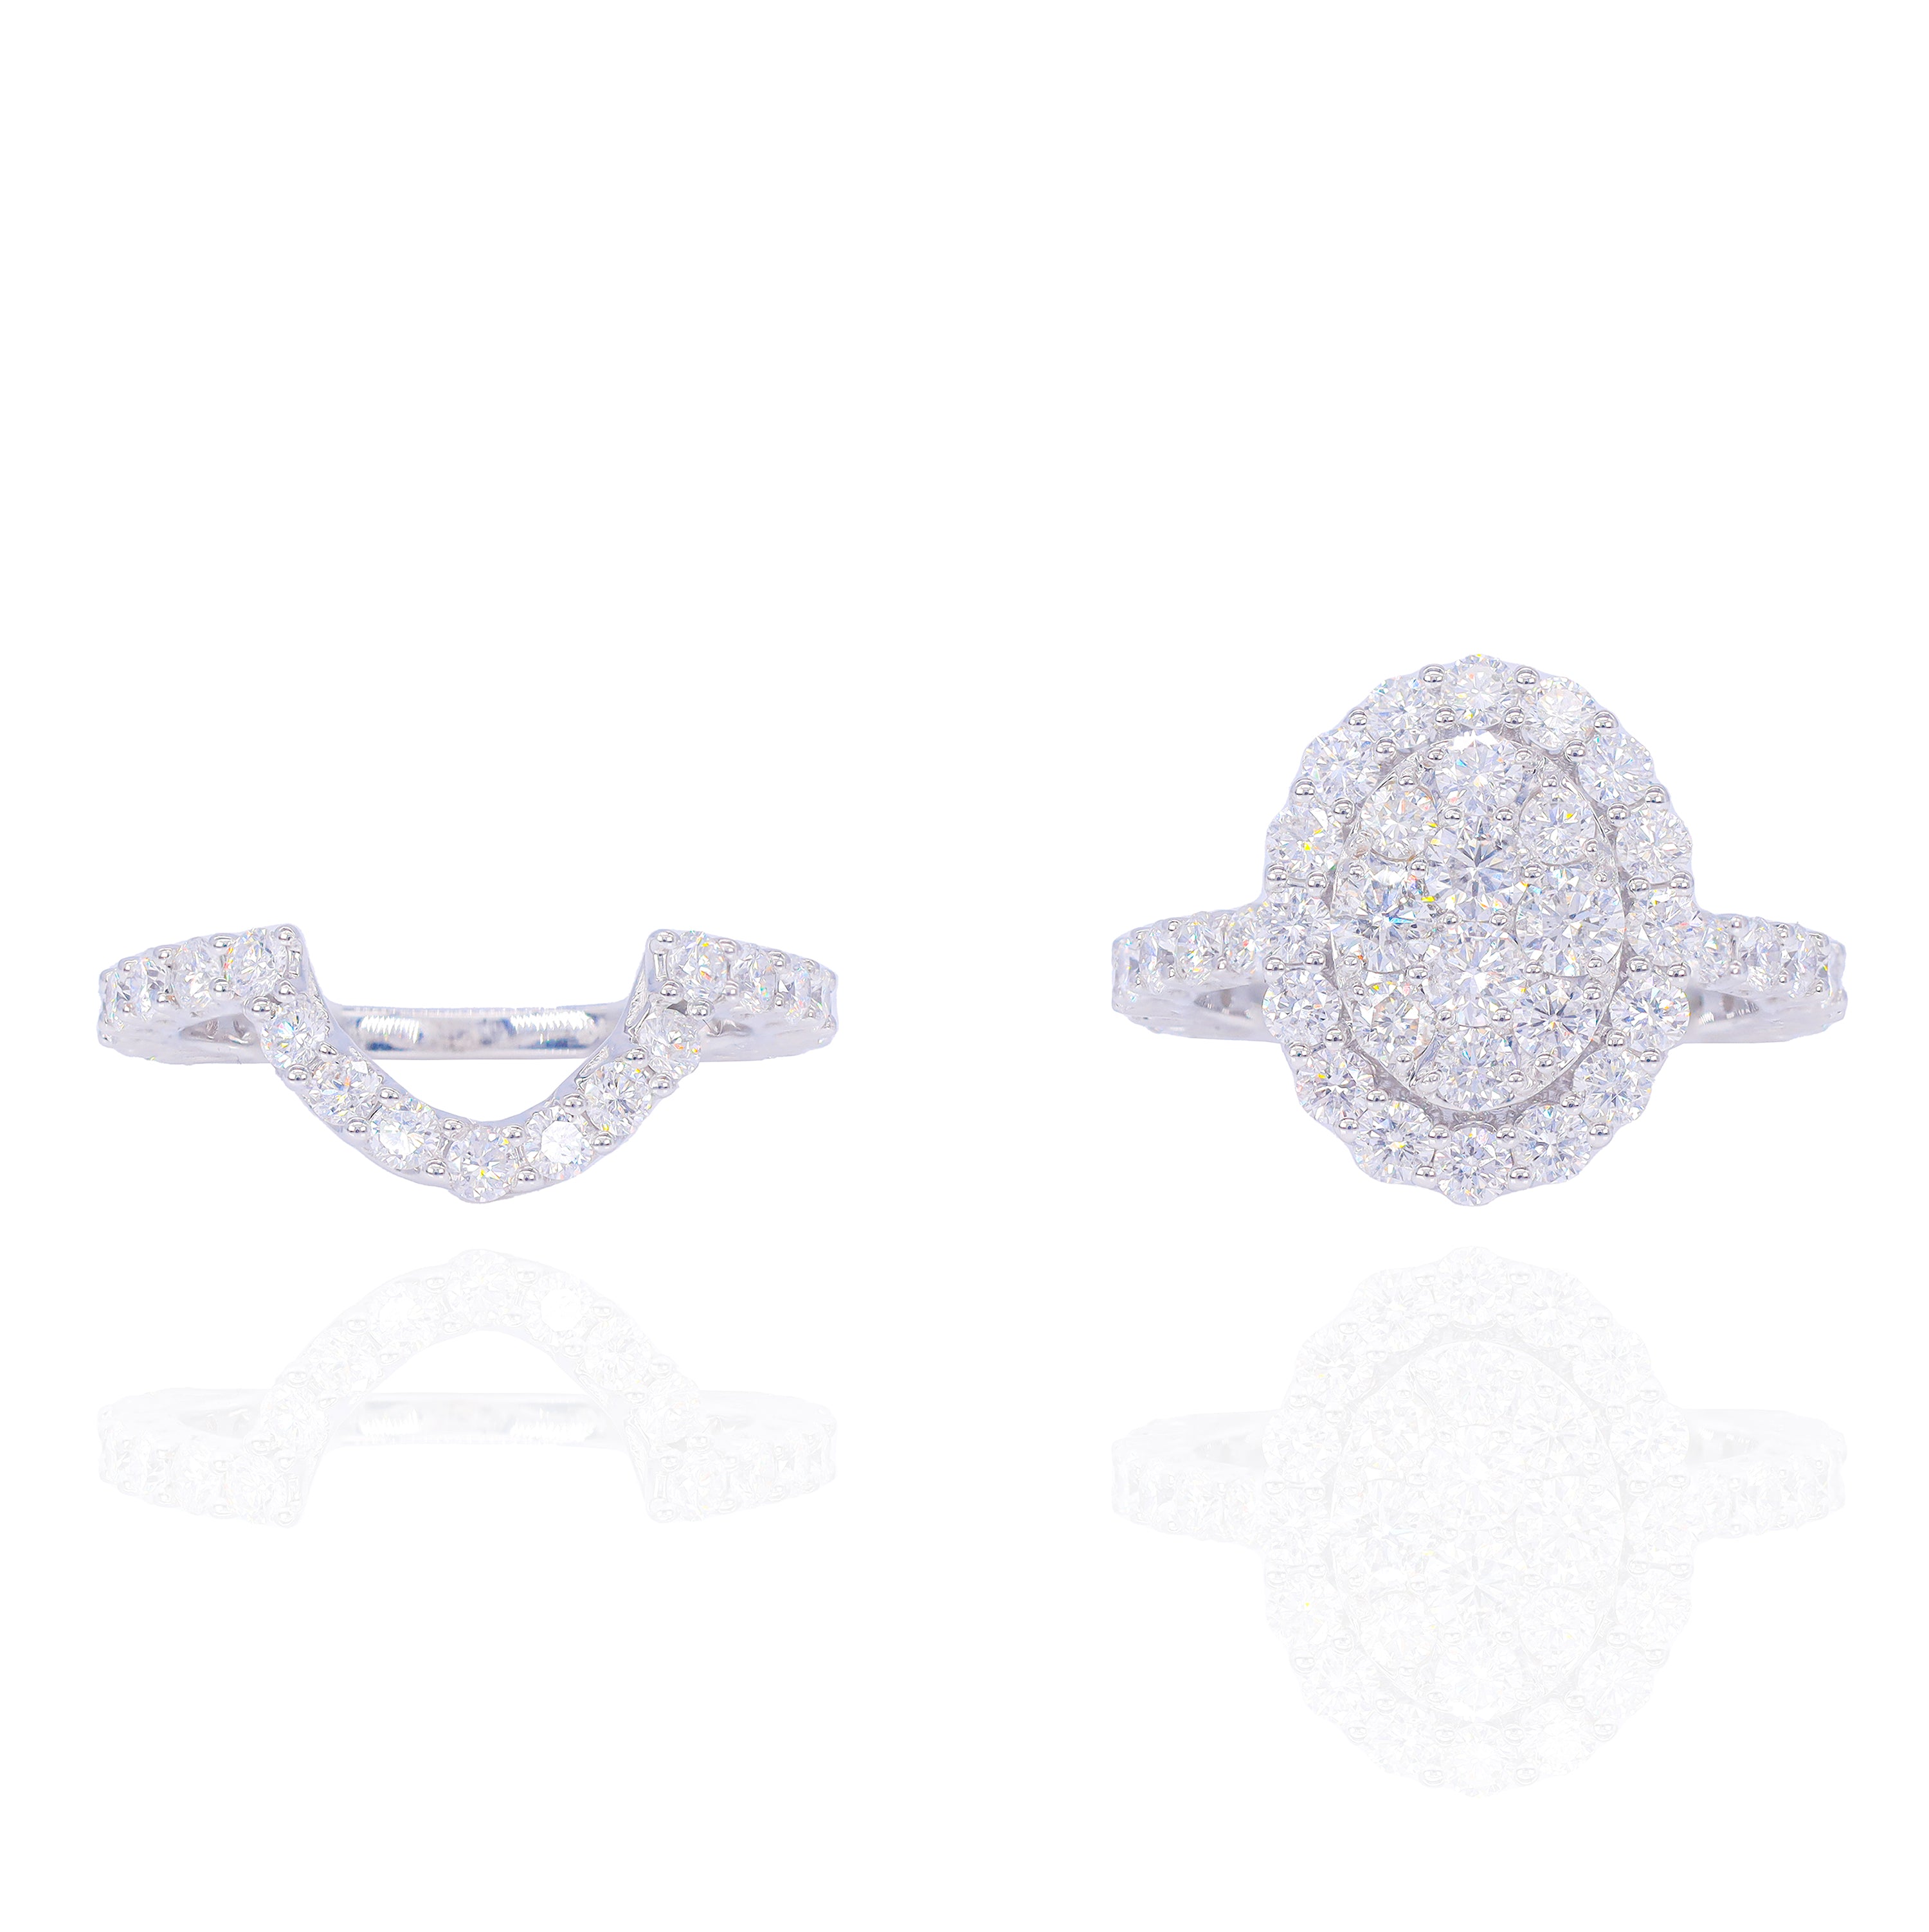 Oval Shaped Diamond Engagement Ring & Band